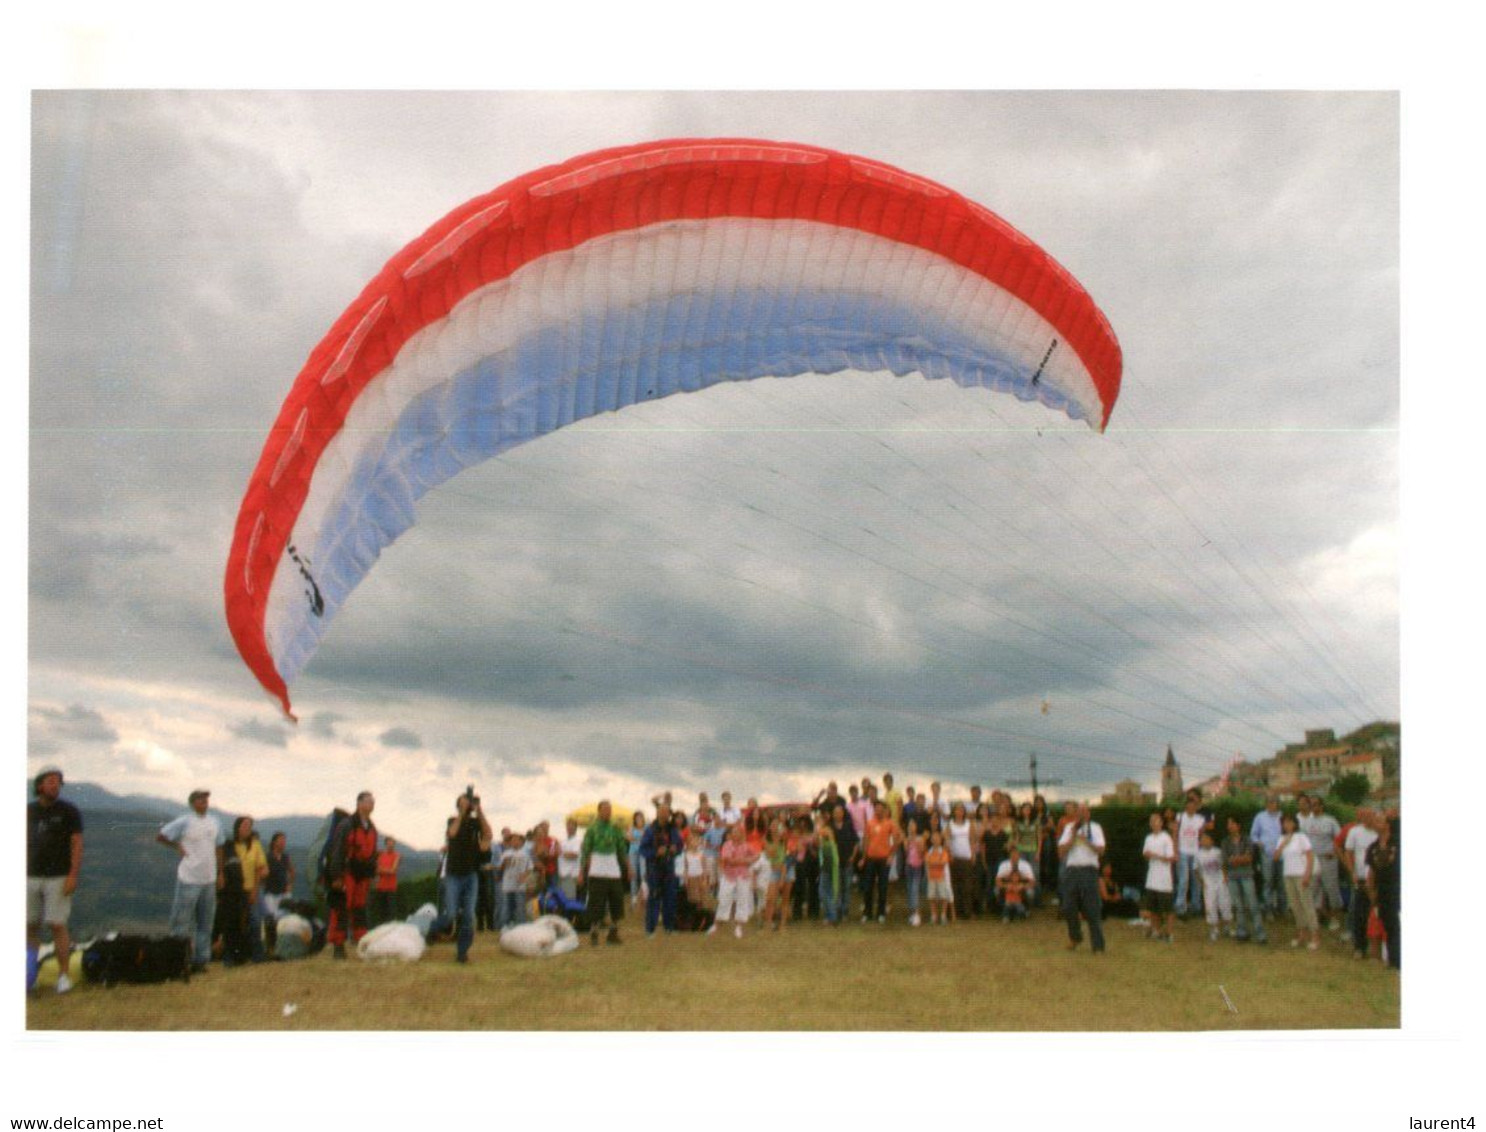 (YY 22) Italy - Cairano - Festa Dell'Aria - Festival De L'Air Parachutes - Flight & Aerial Festival - - Parachutisme